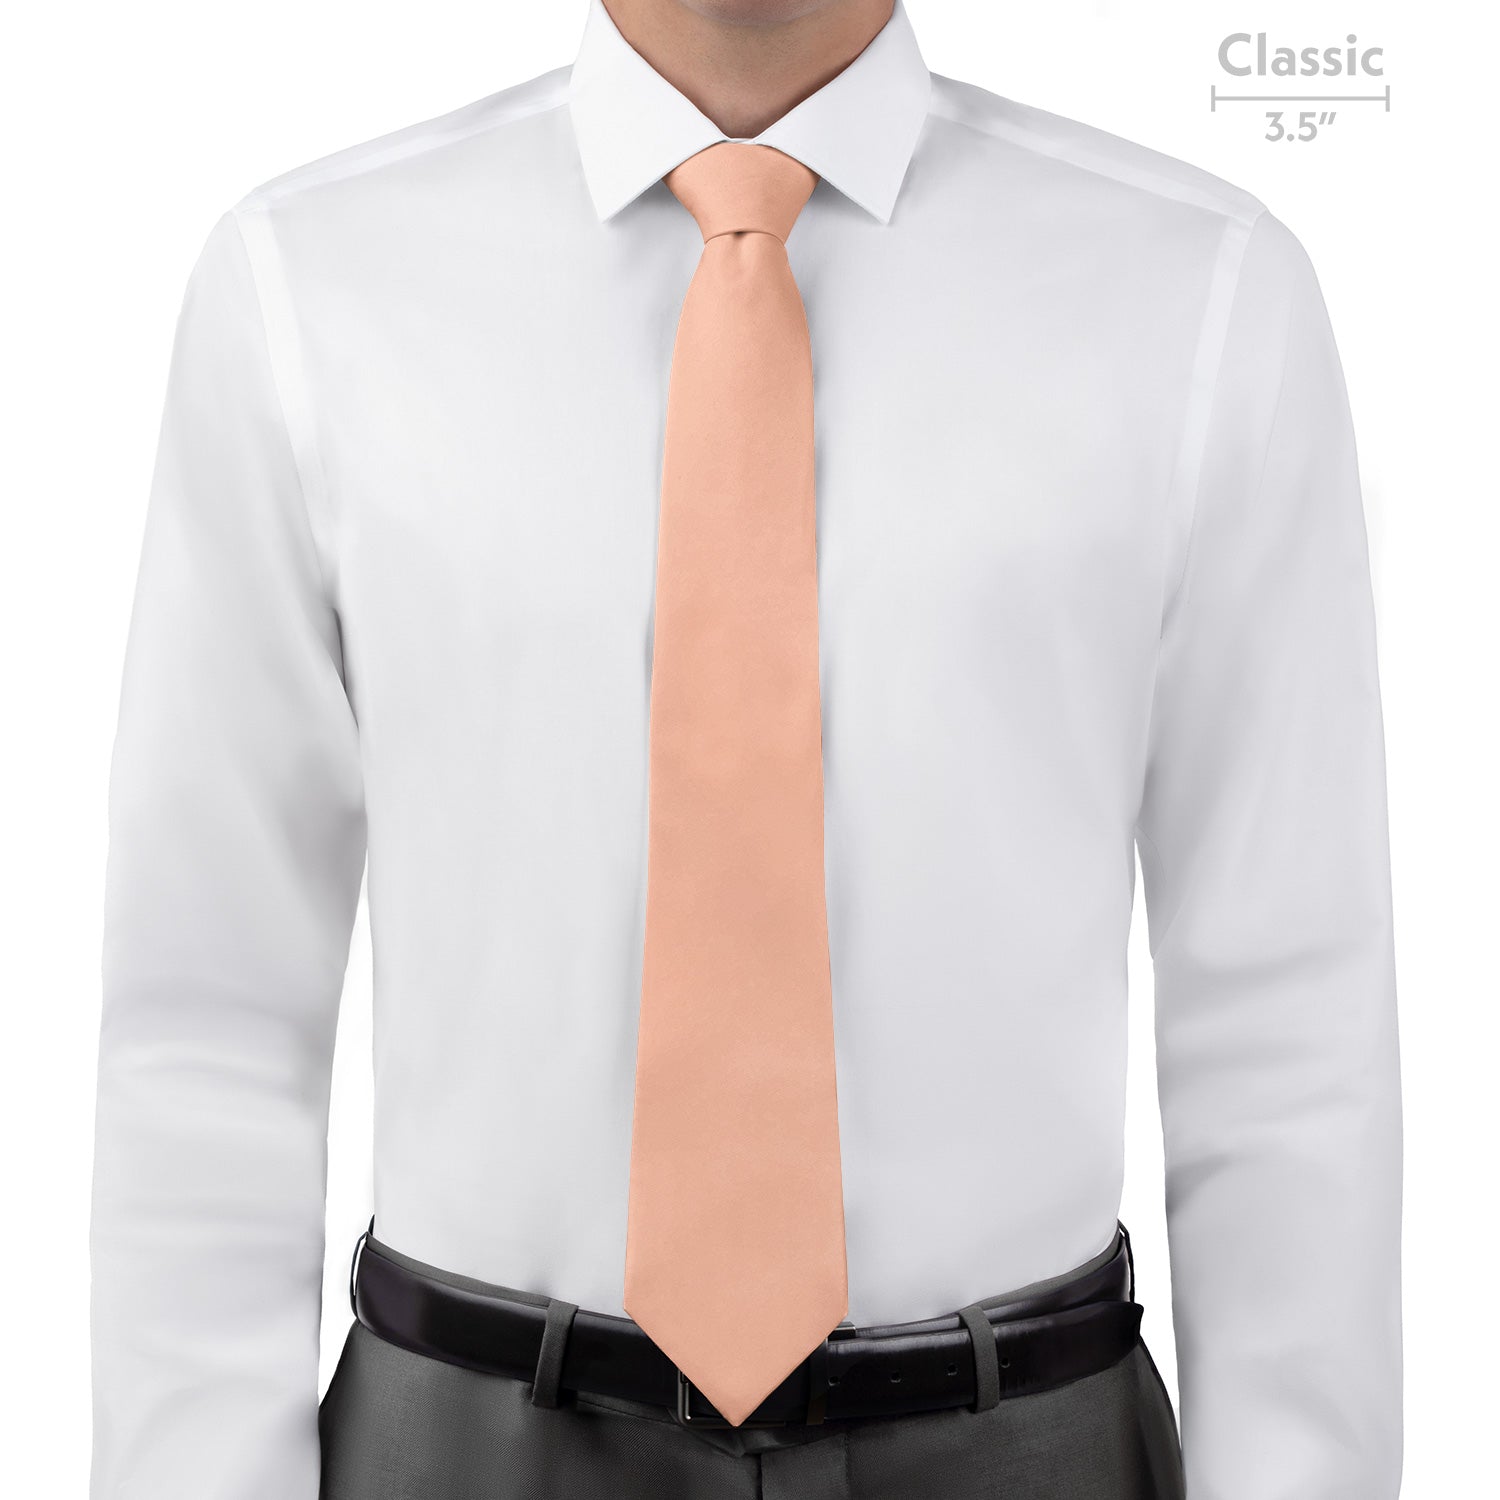 Solid KT Peach Necktie - Classic - Knotty Tie Co.